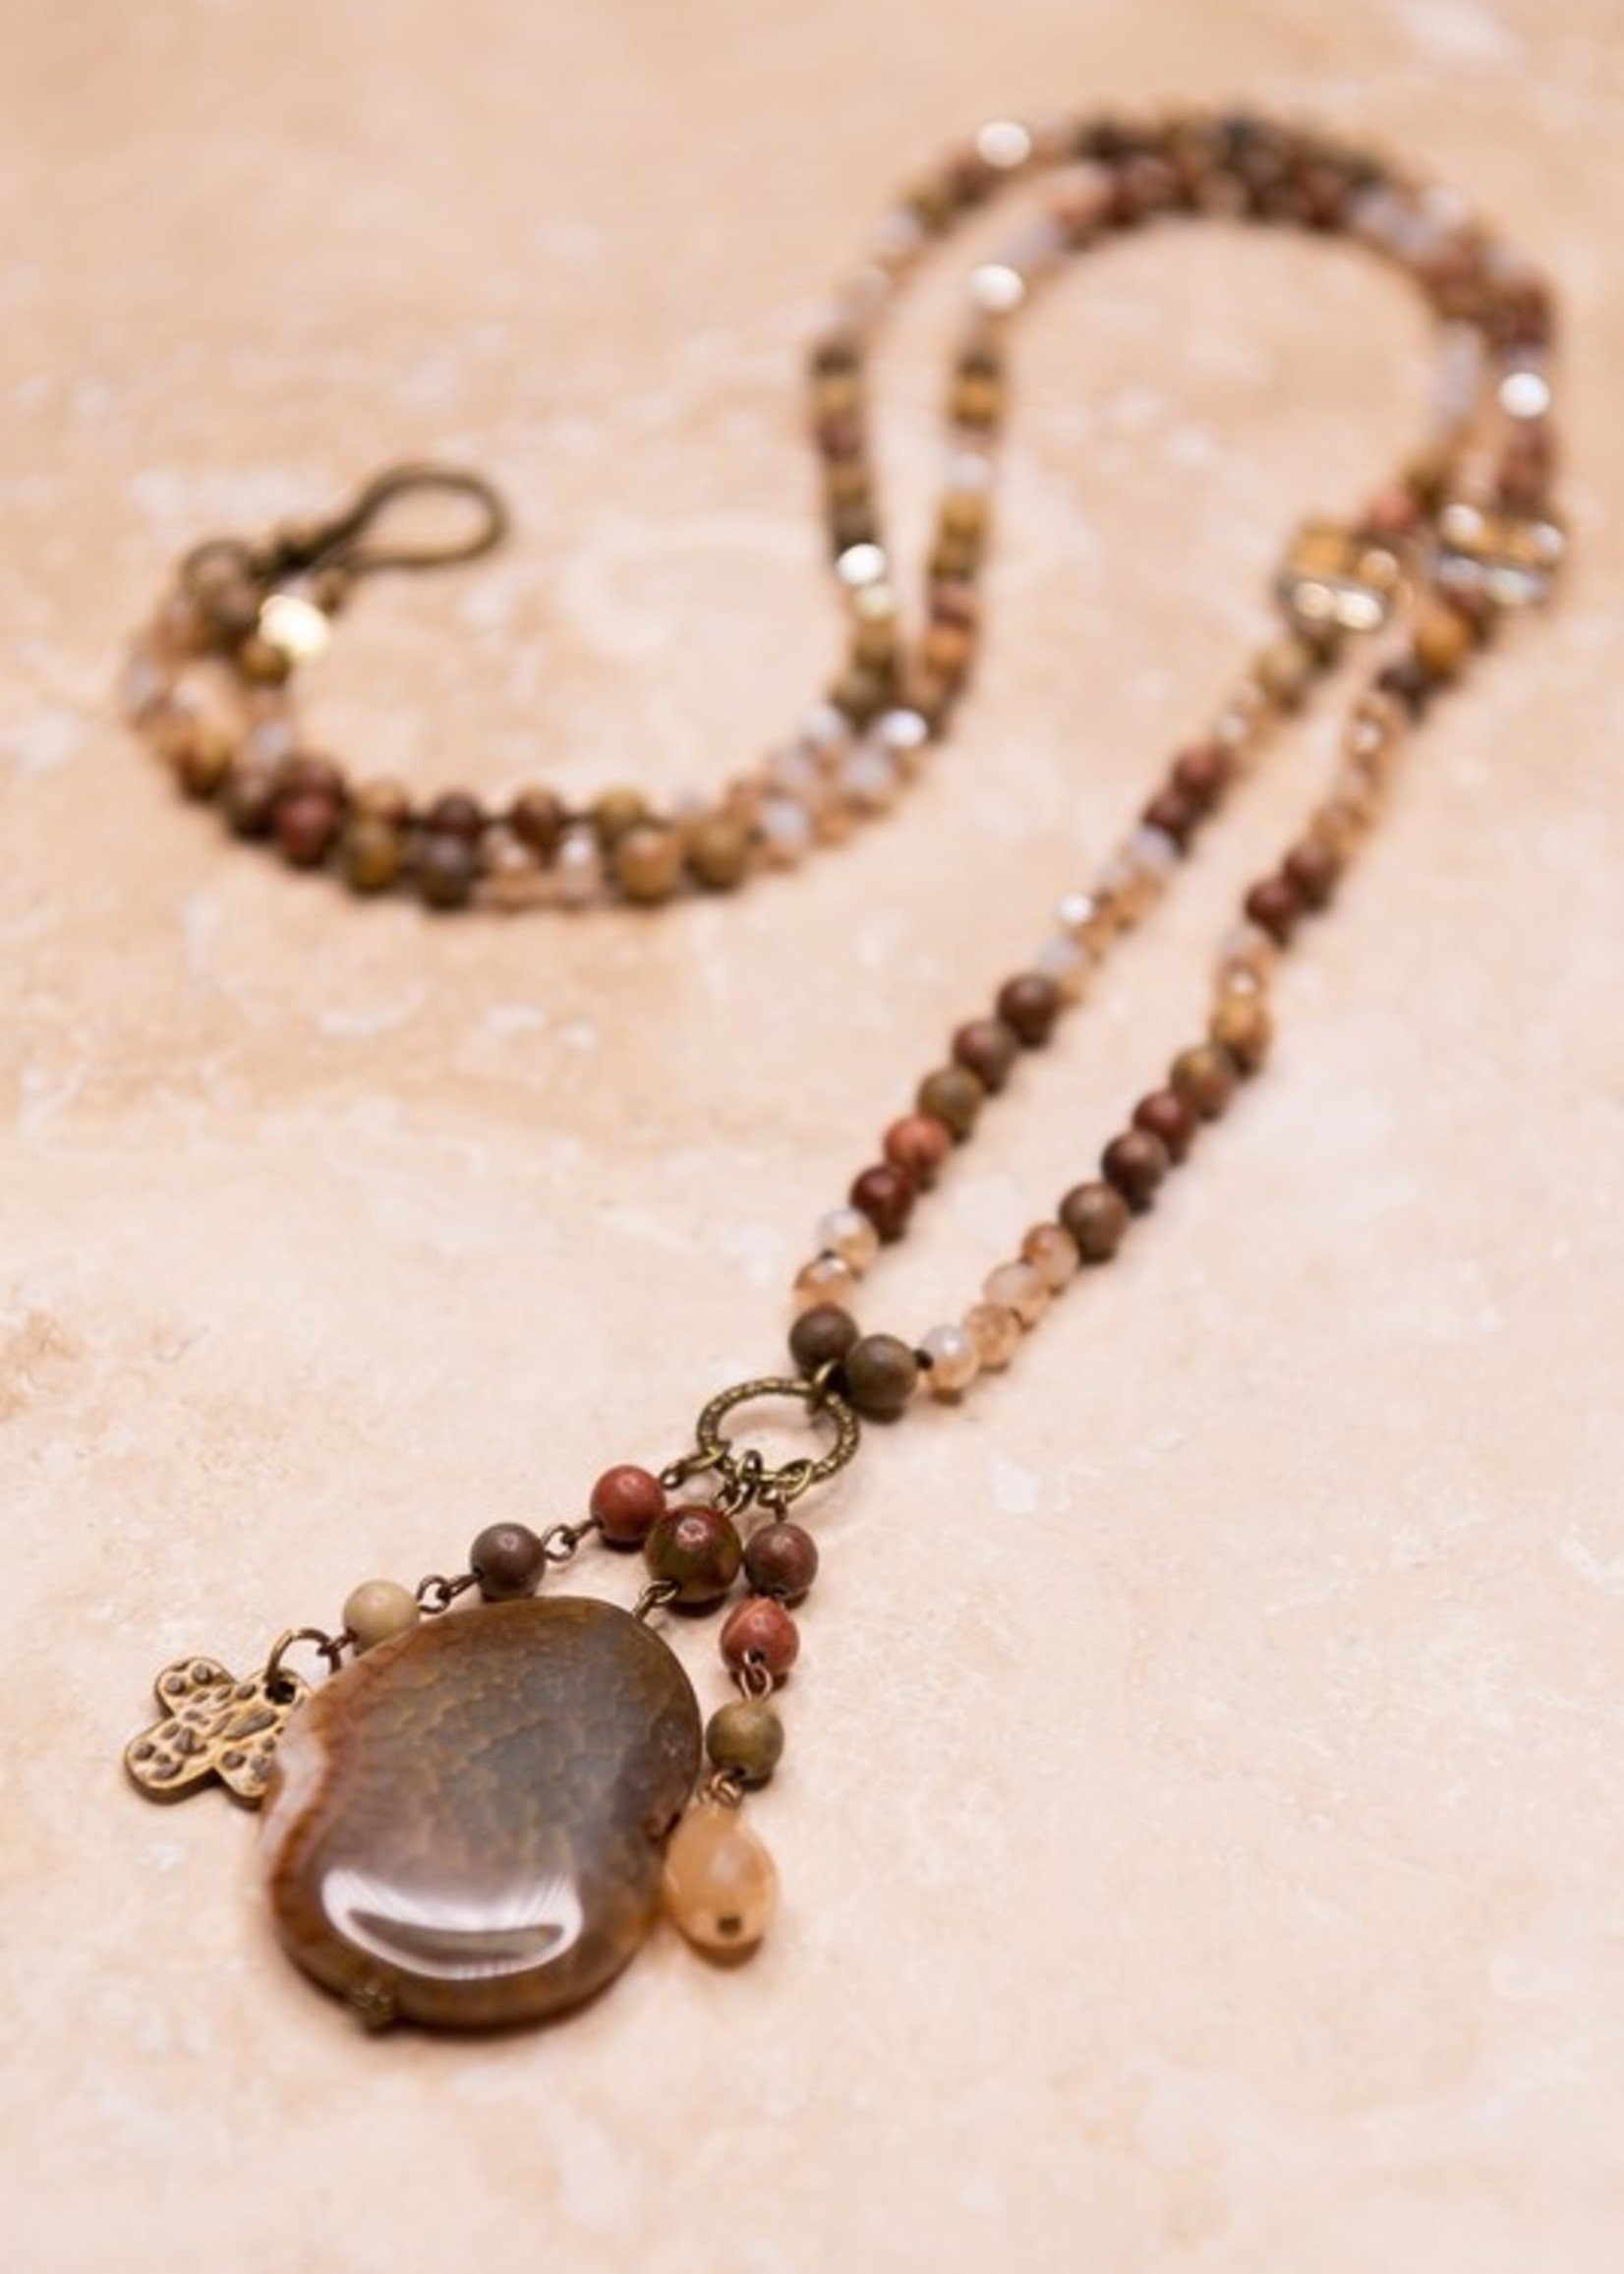 Stone pendant and charm necklace jasper